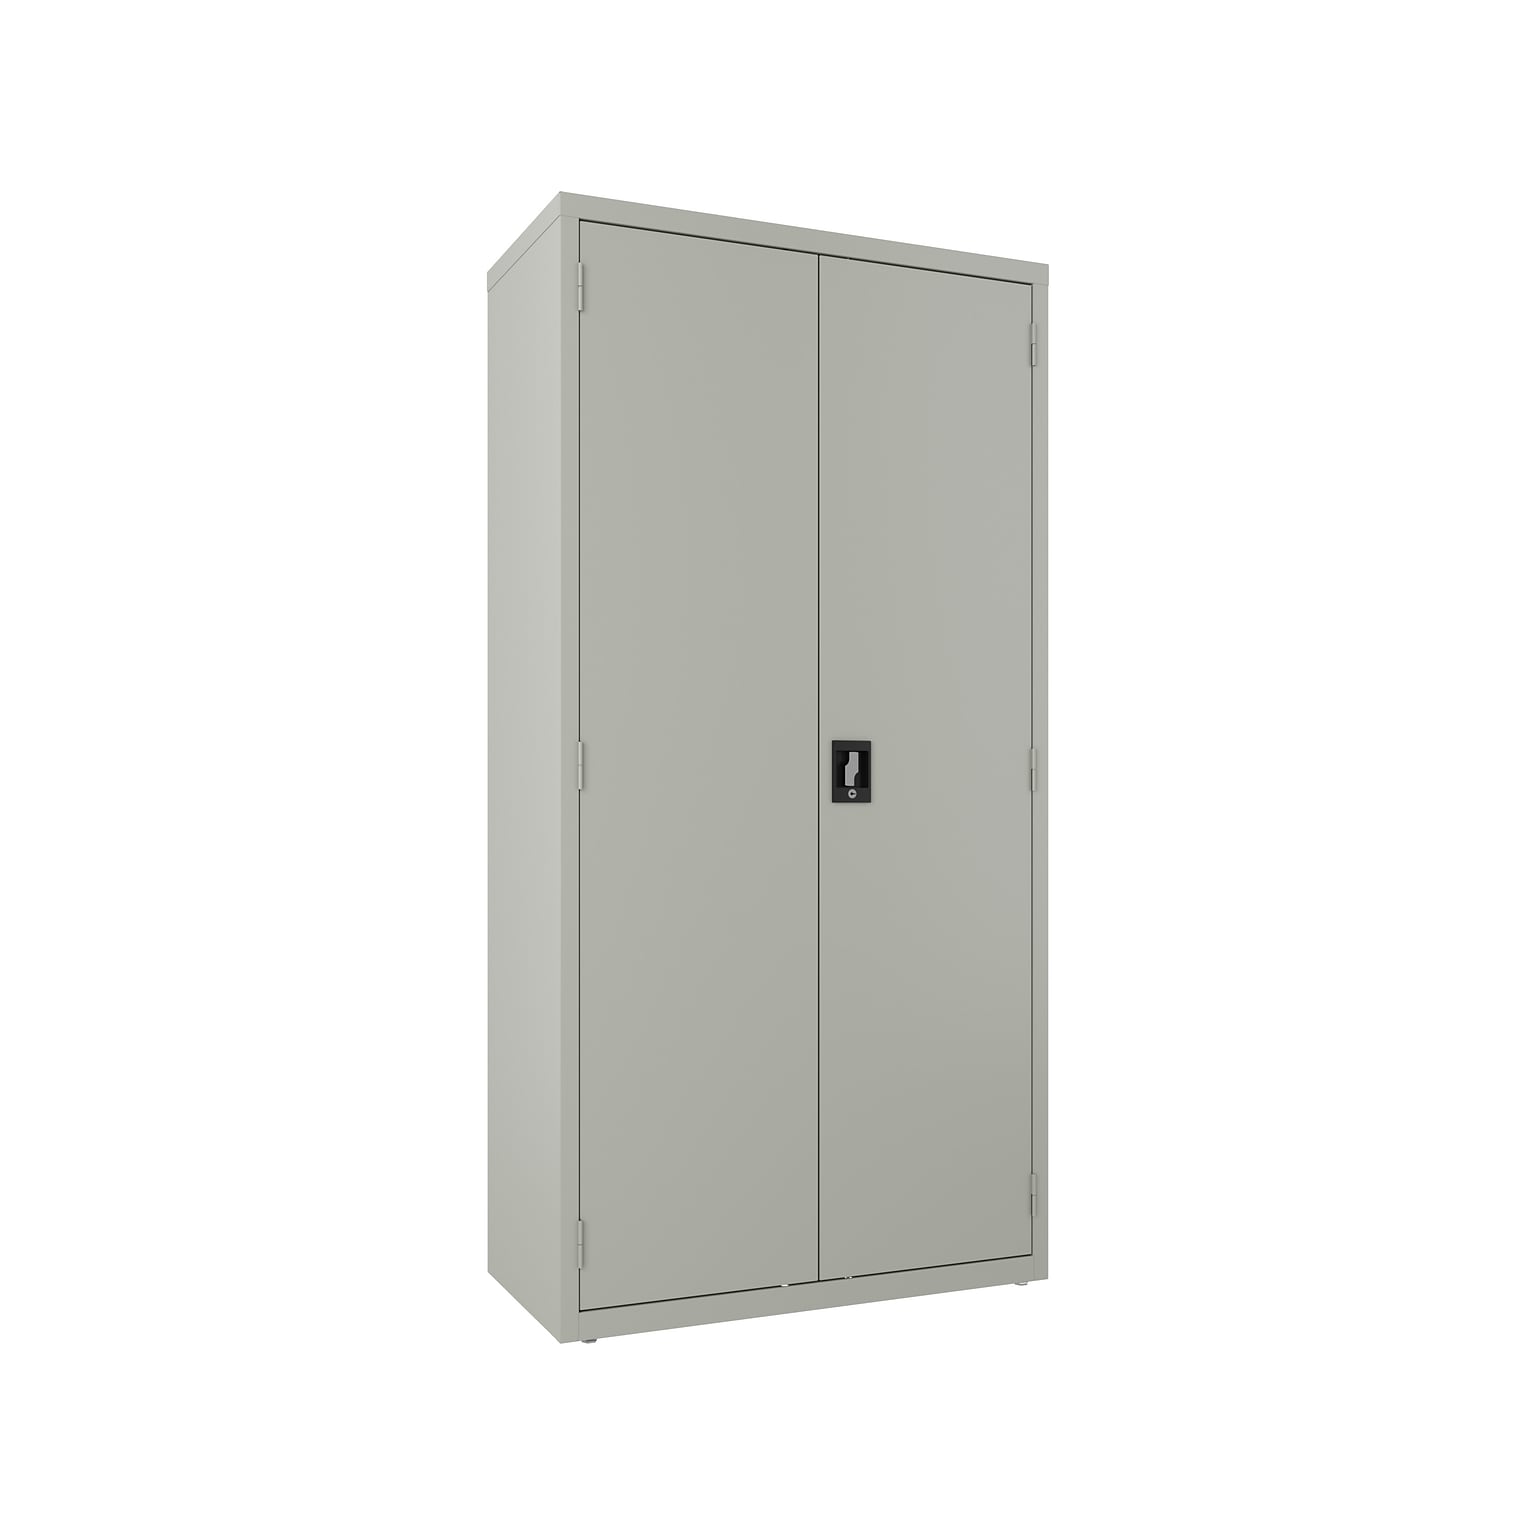 Hirsh 72 Steel Wardrobe Cabinet with 4 Shelves, Light Gray (22633)